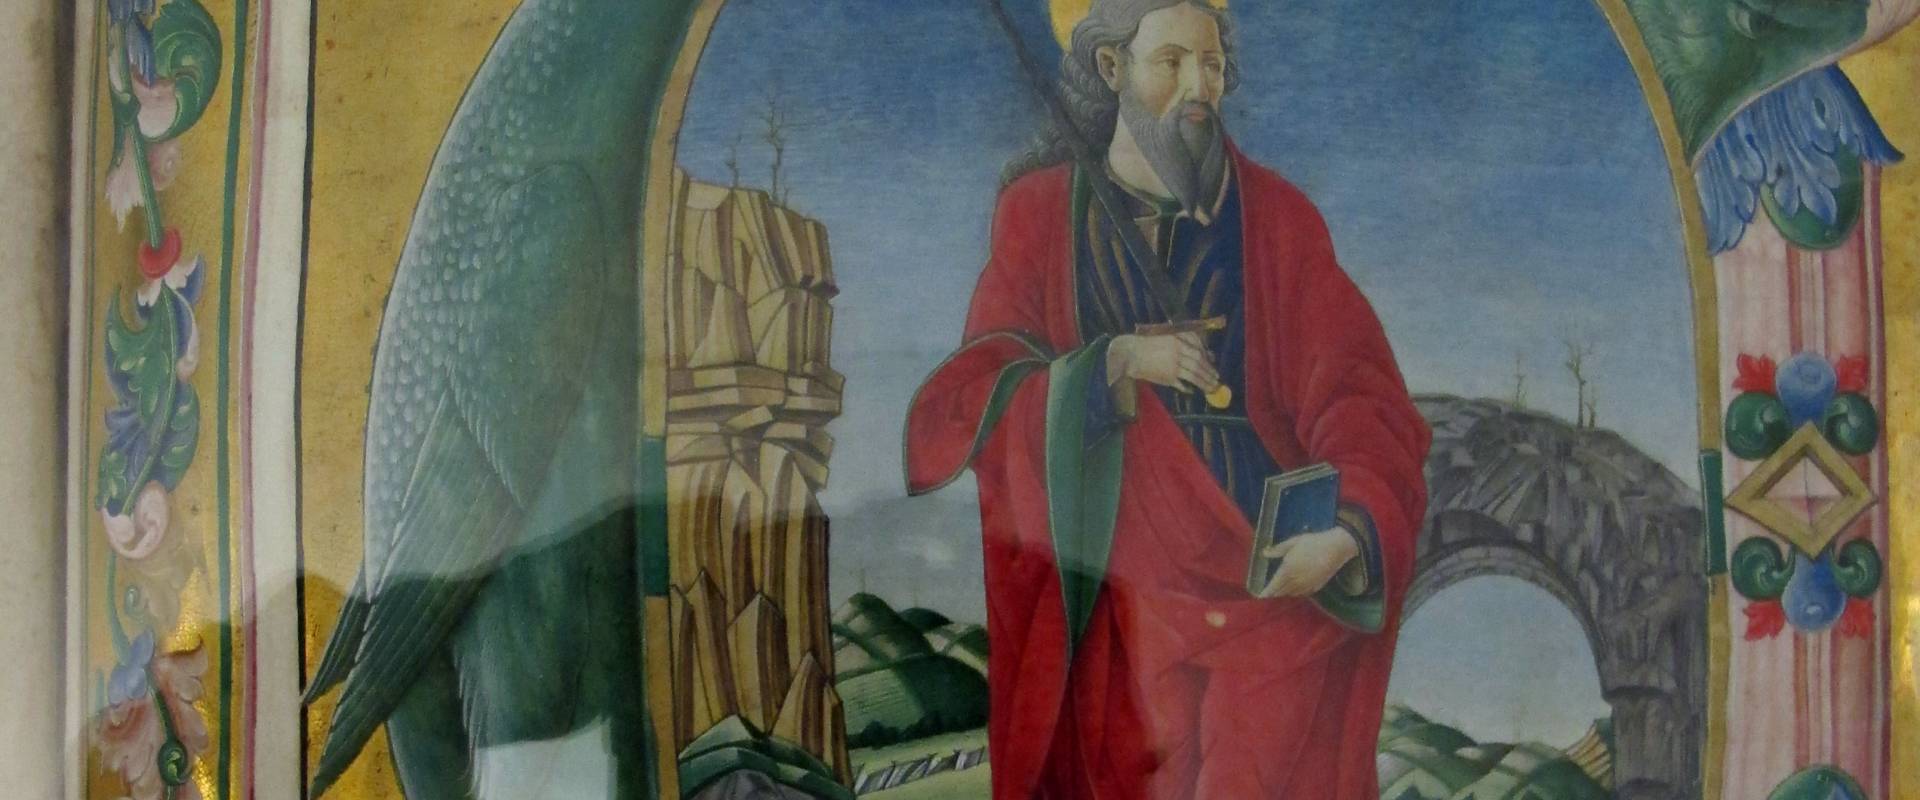 Jacopo filippo argenta e fra evangelista da reggio, antifonario IV, post 1485, 02 photo by Sailko